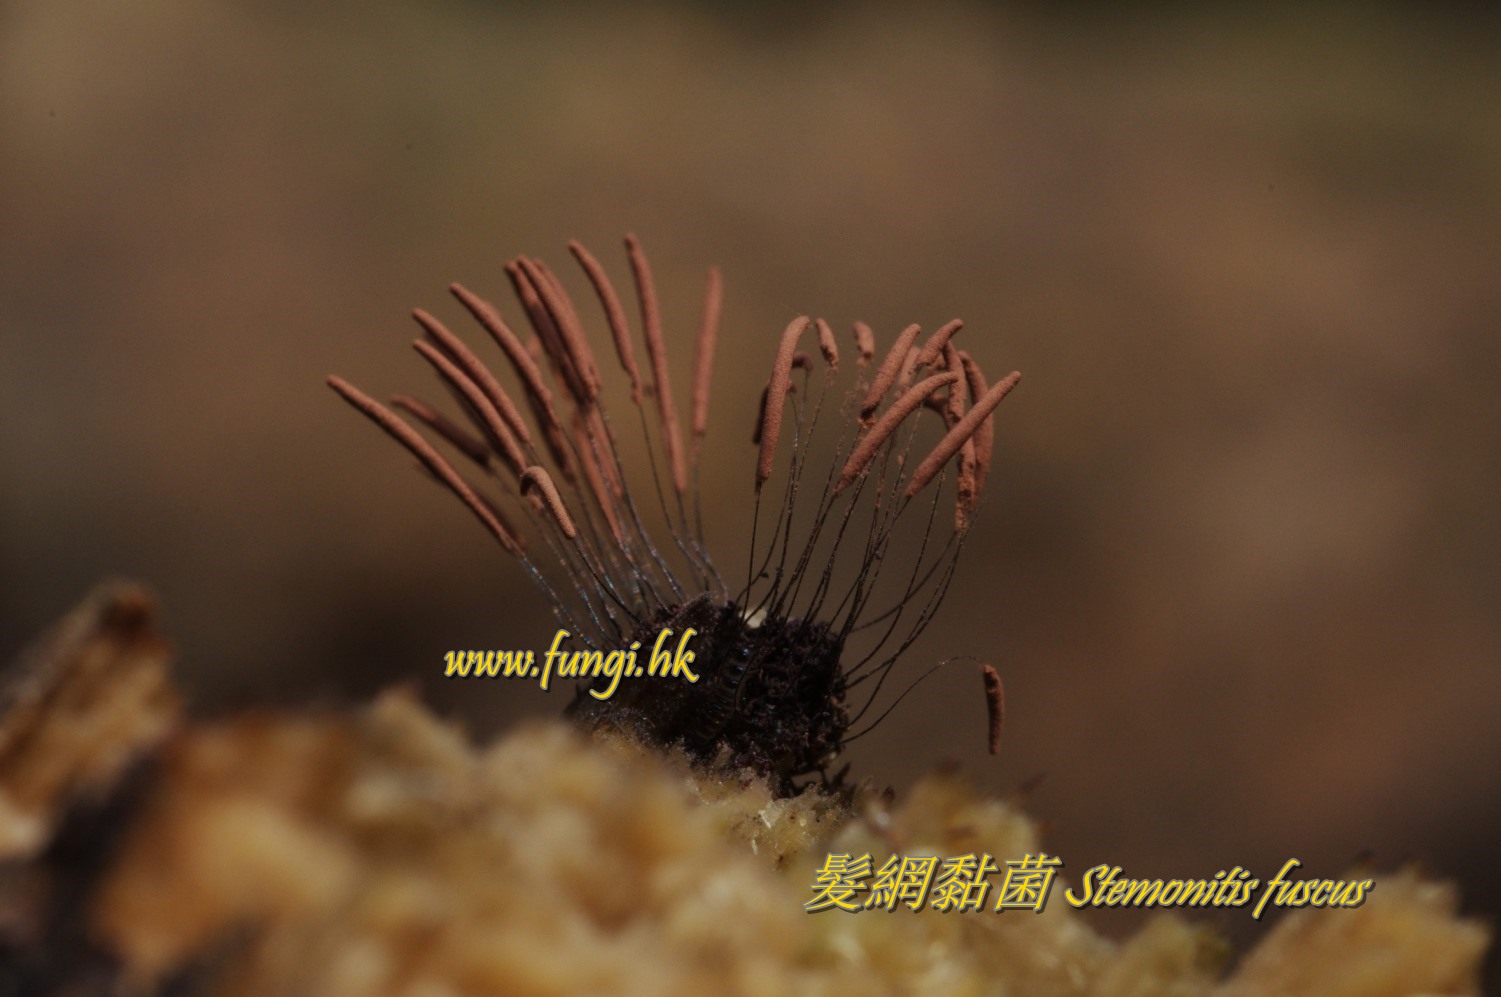 髮網黏菌 Stemonitis fuscus